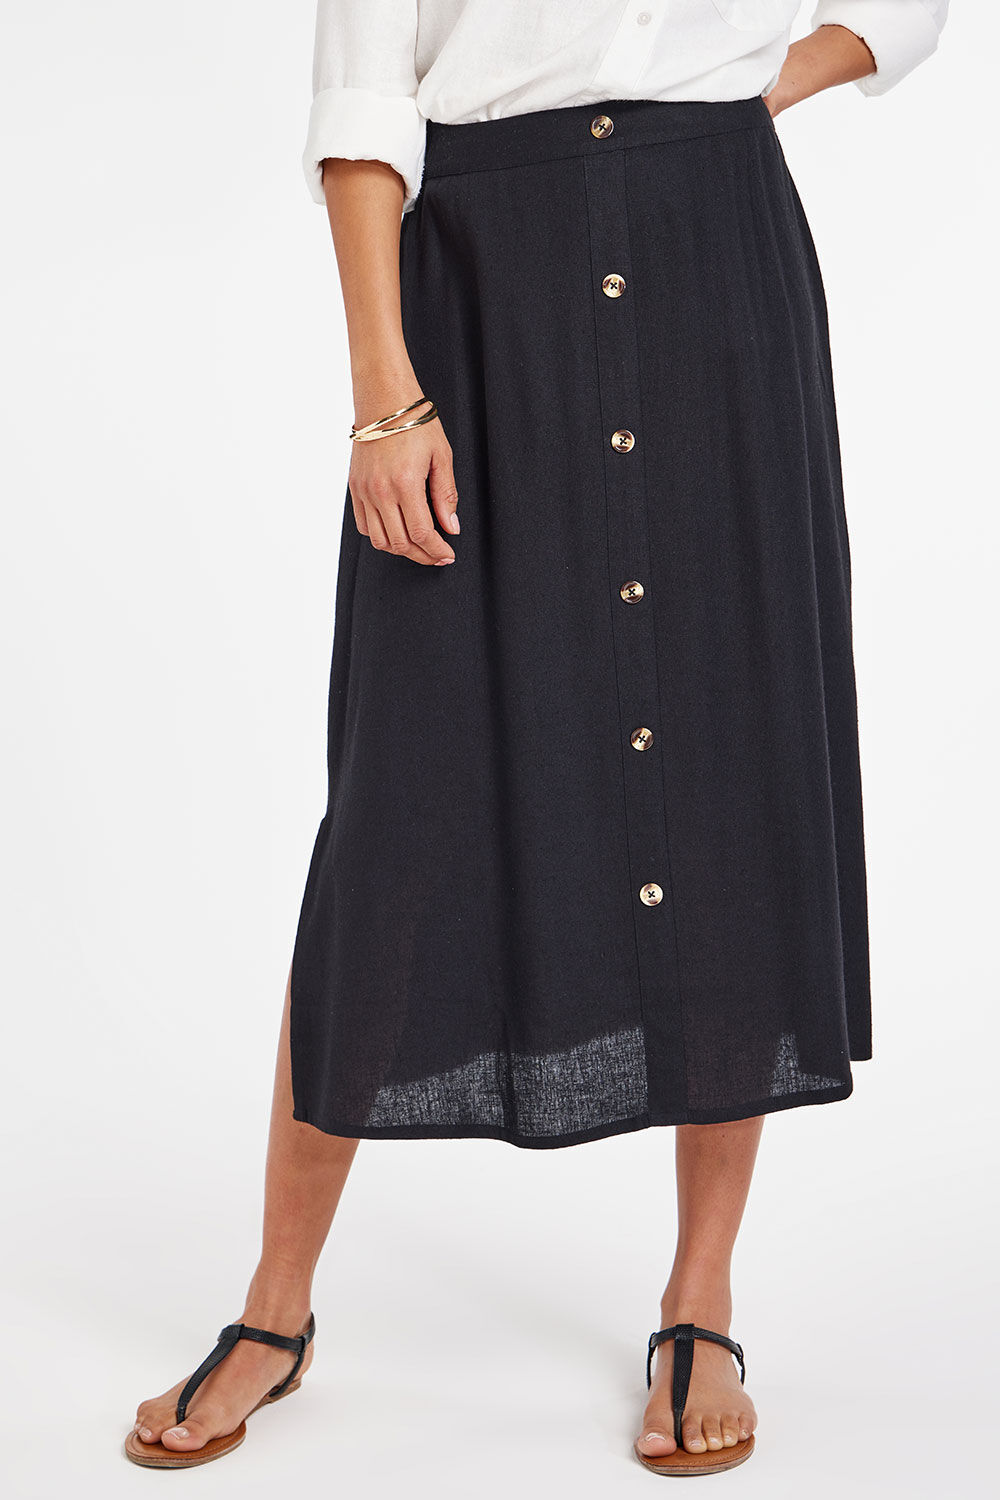 Bonmarche Black Plain Linen Button Through Elasticated Skirt, Size: 10 - Holiday Shop